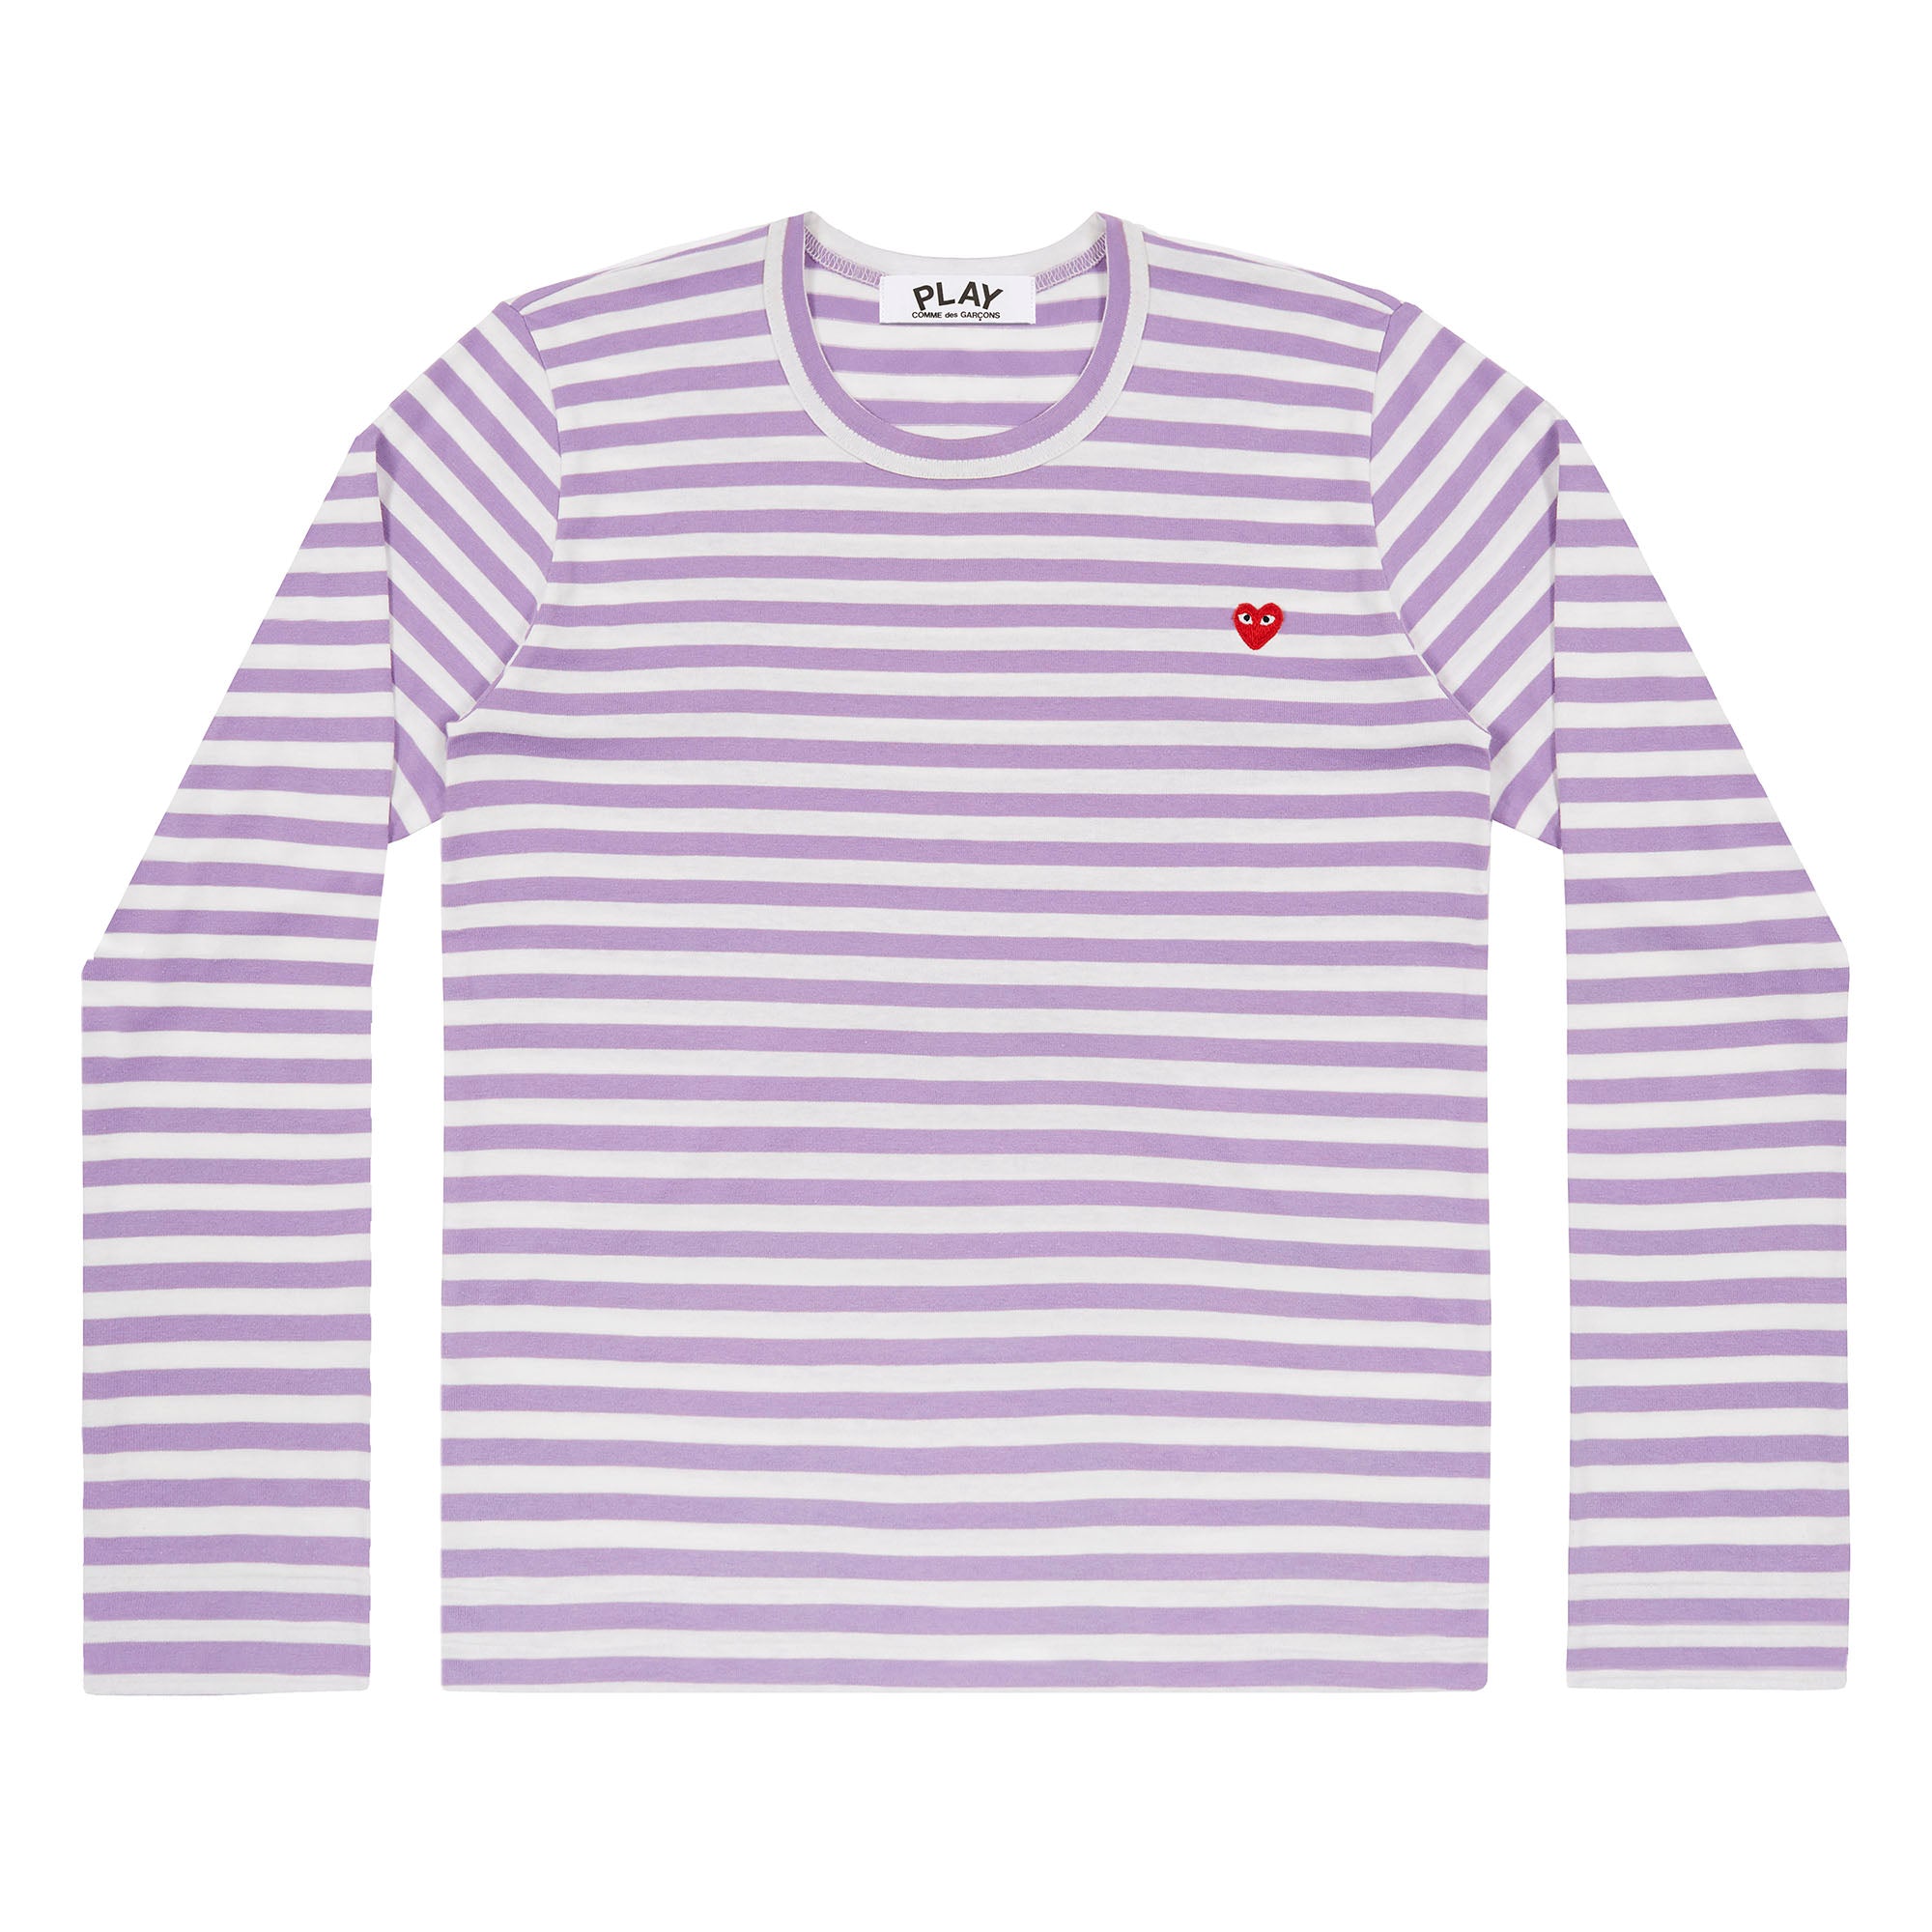 cdg red striped shirt